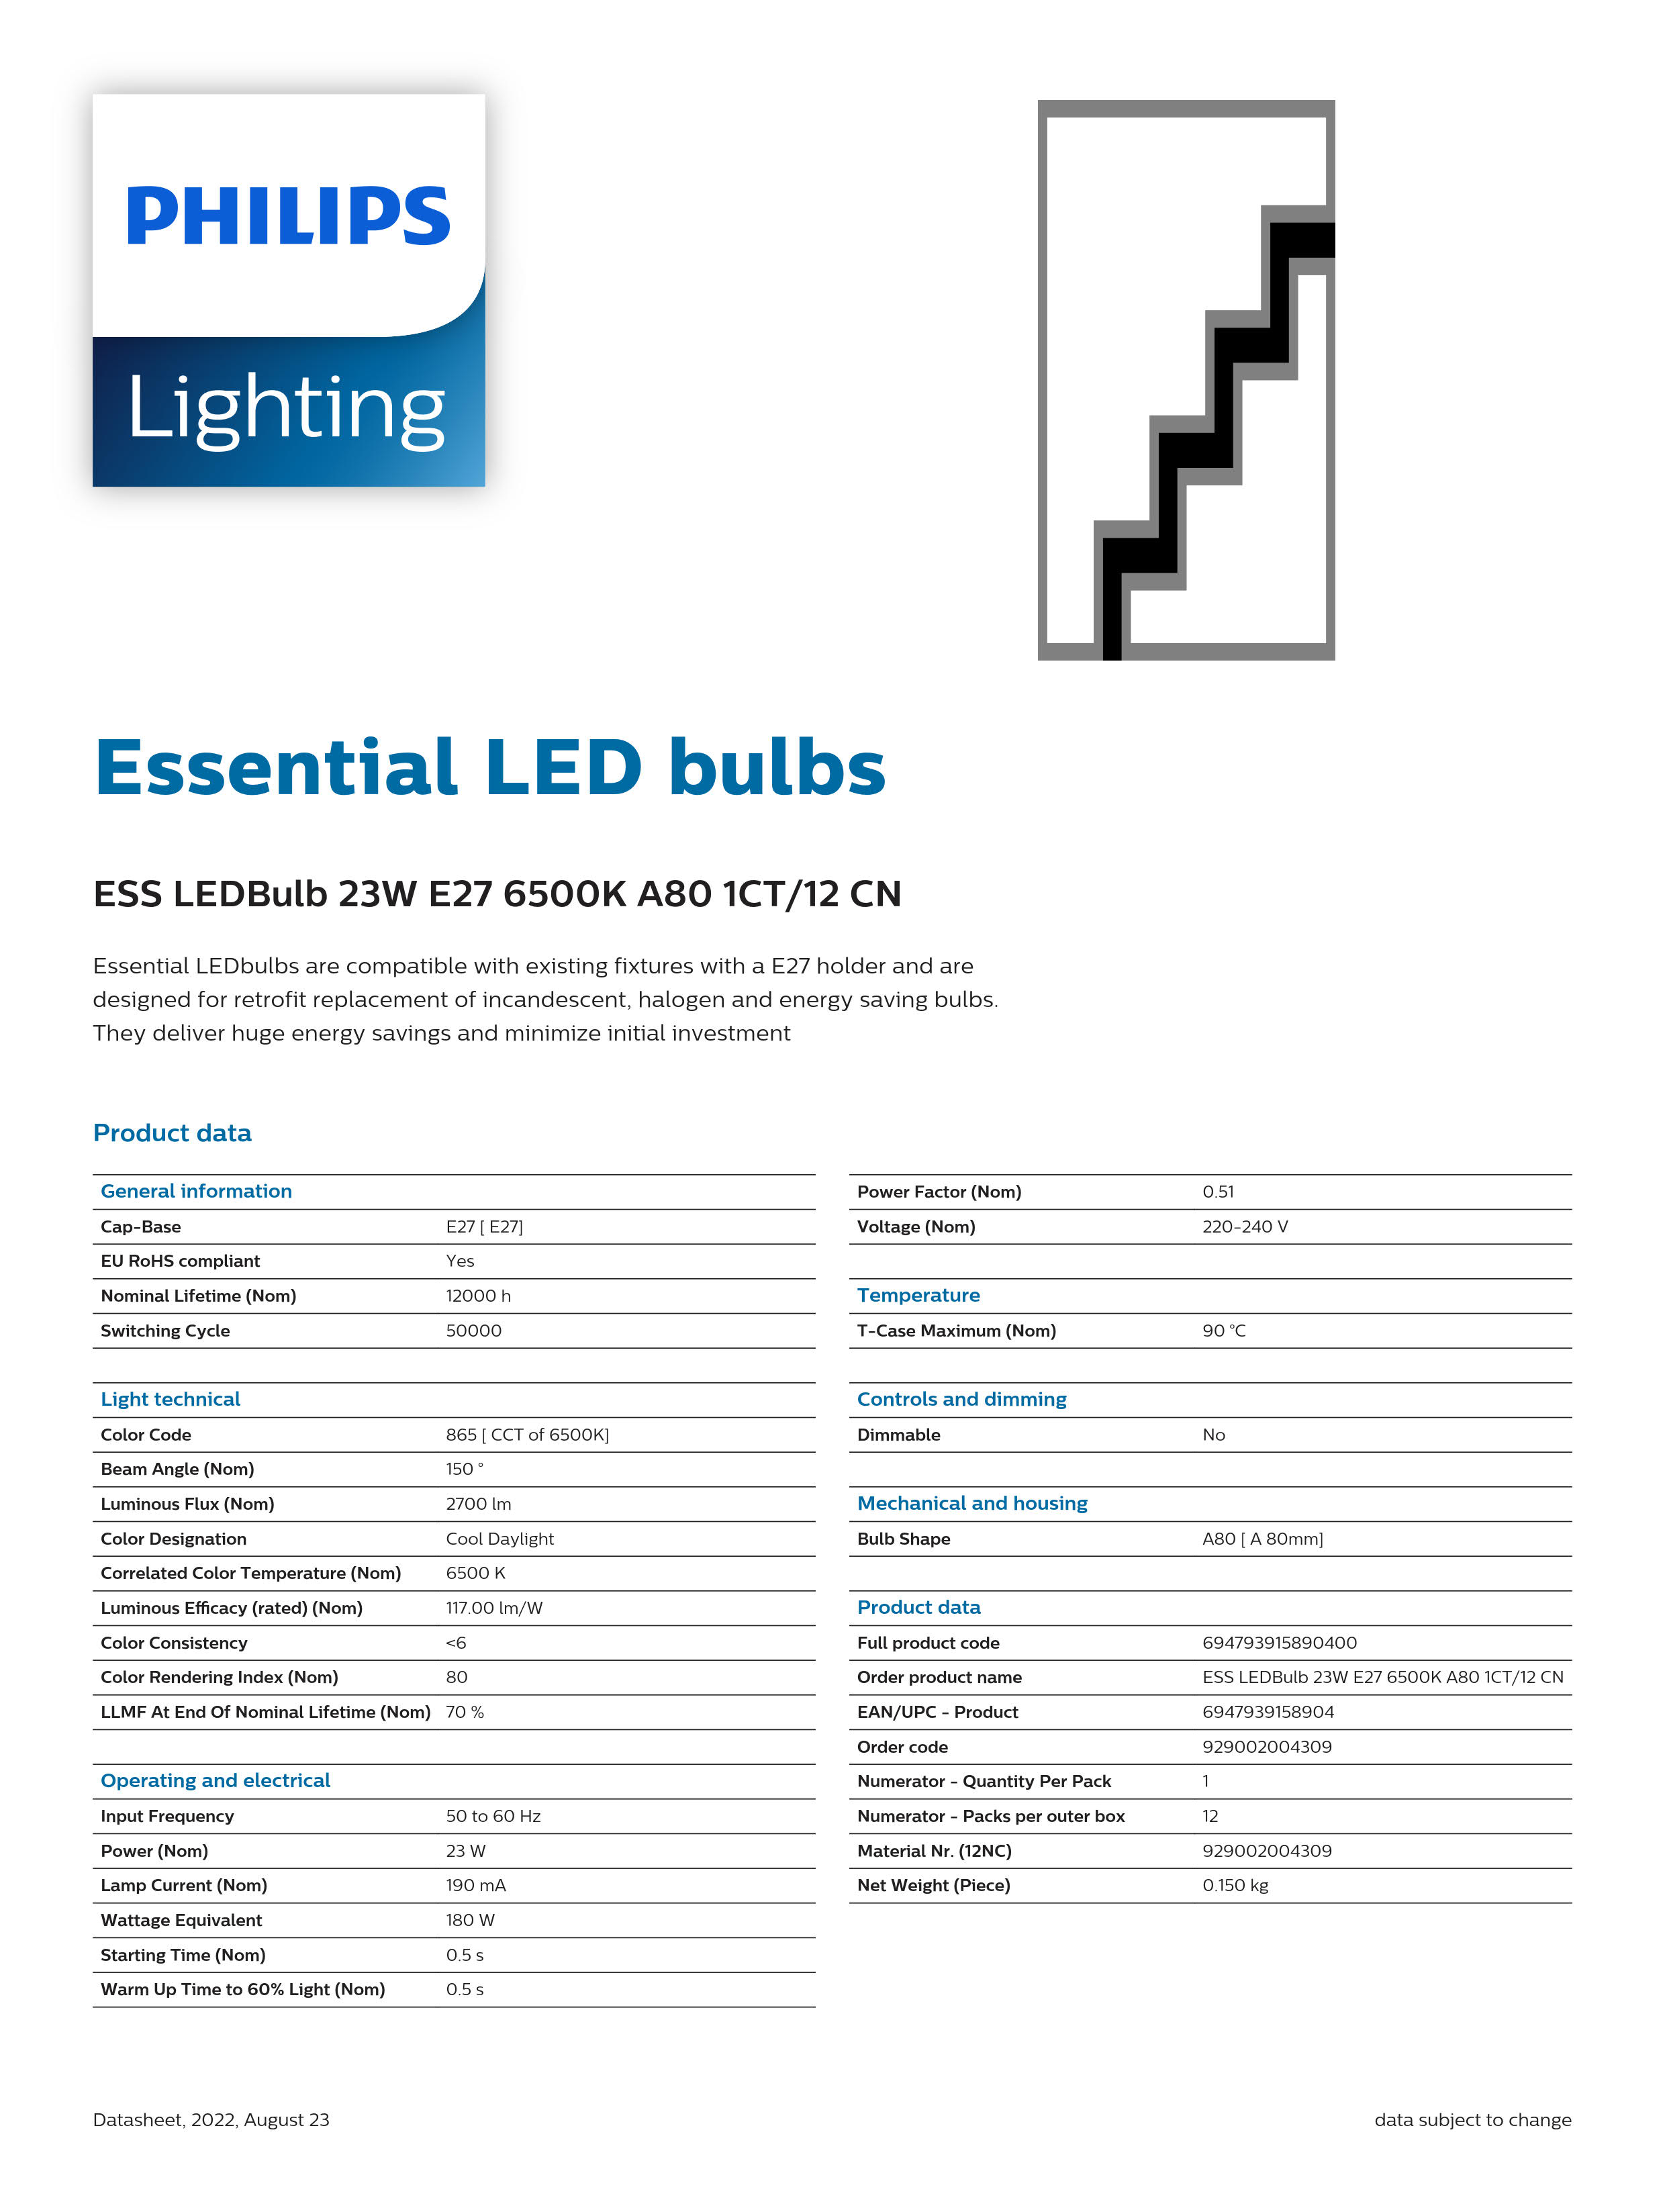 PHILIPS Essential LED bulbs 23W E27 6500K 230V 1CT/12 CN 929002004309